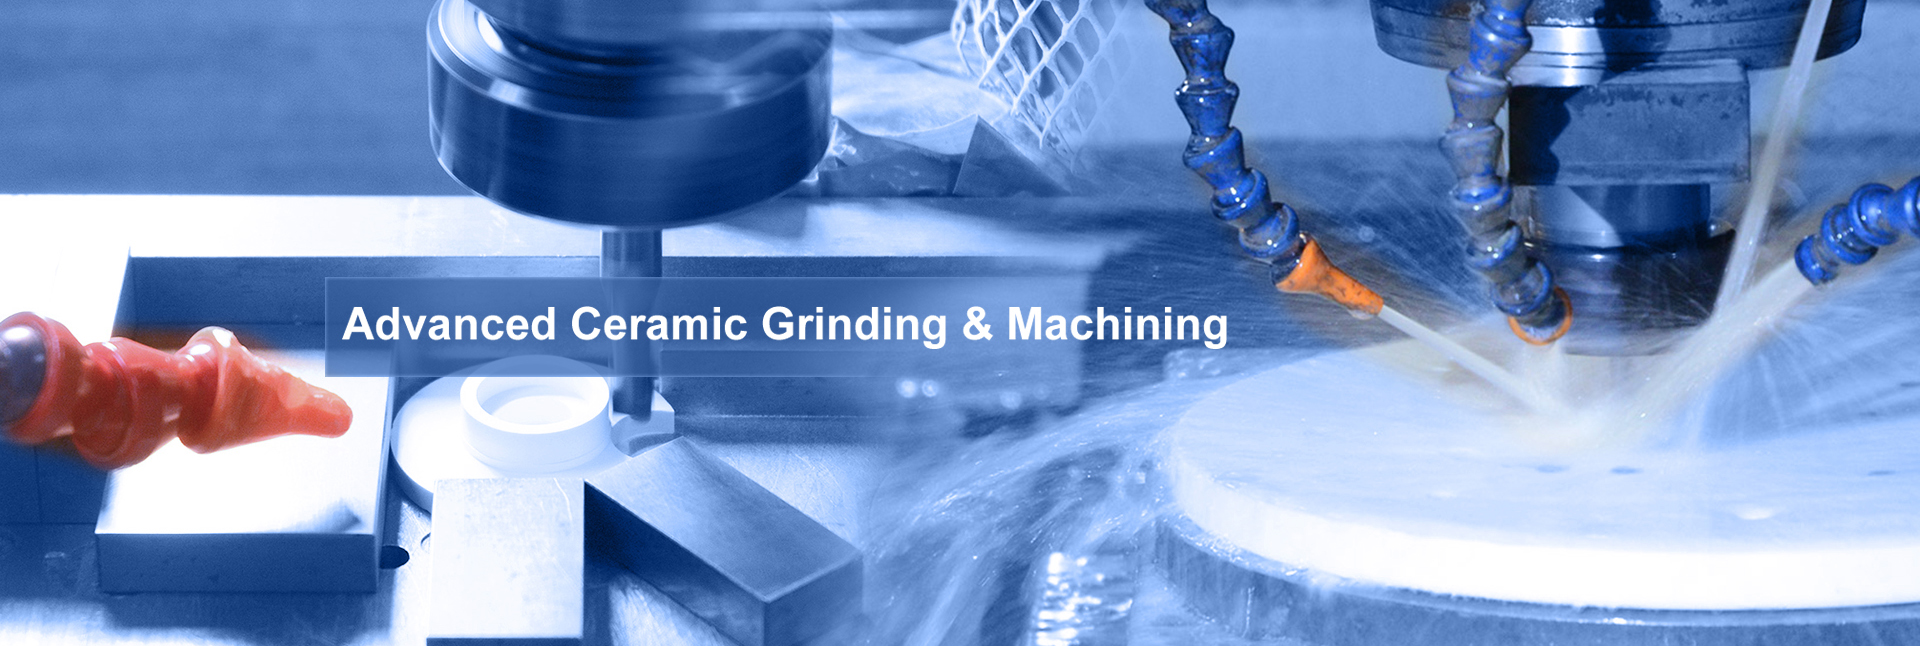 Advanced Ceramic Grinding & Machining